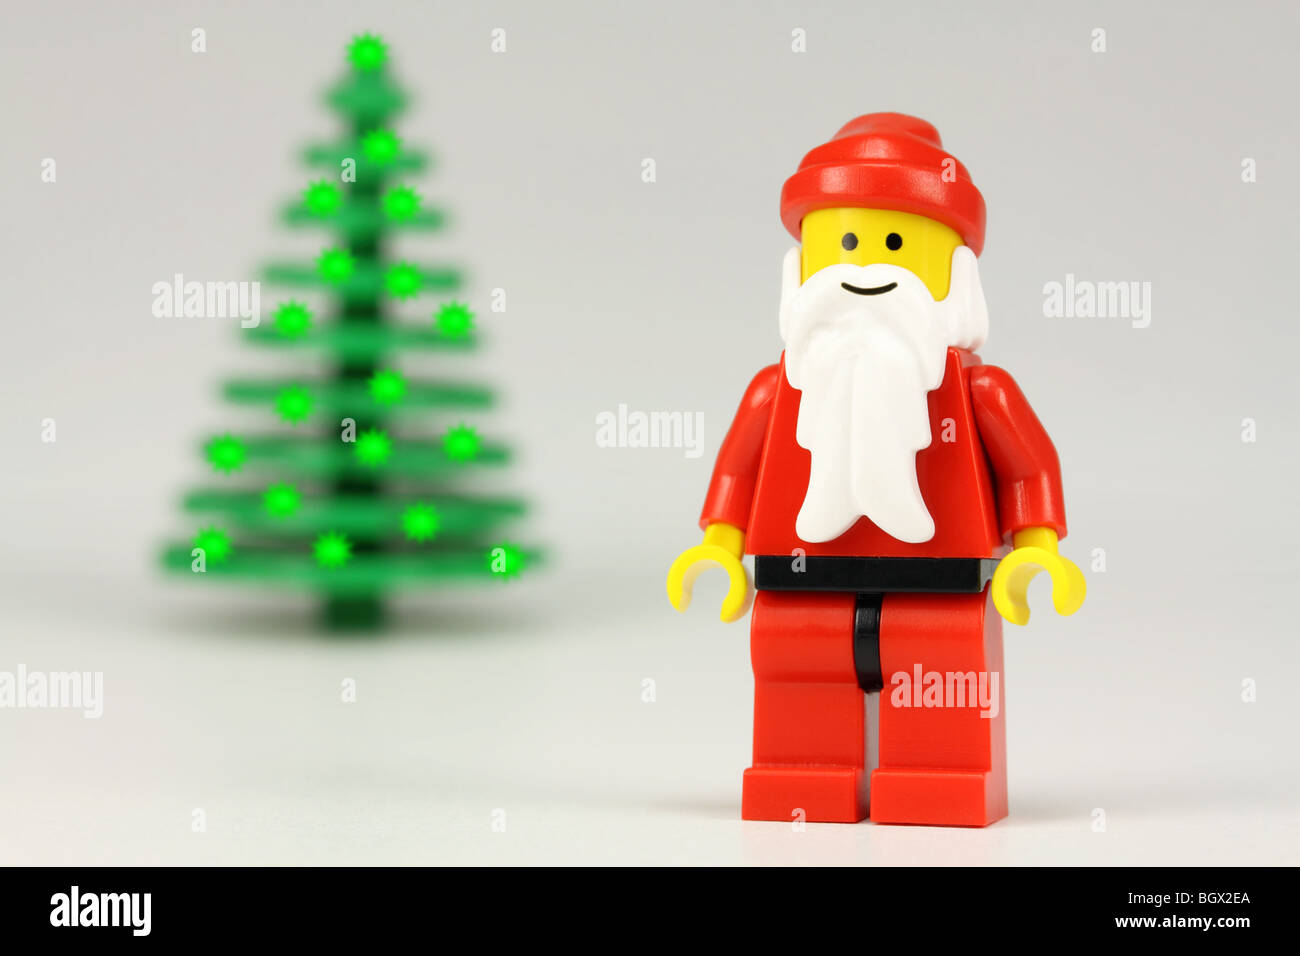 Lego Santa Claus and Christmas tree Stock Photo